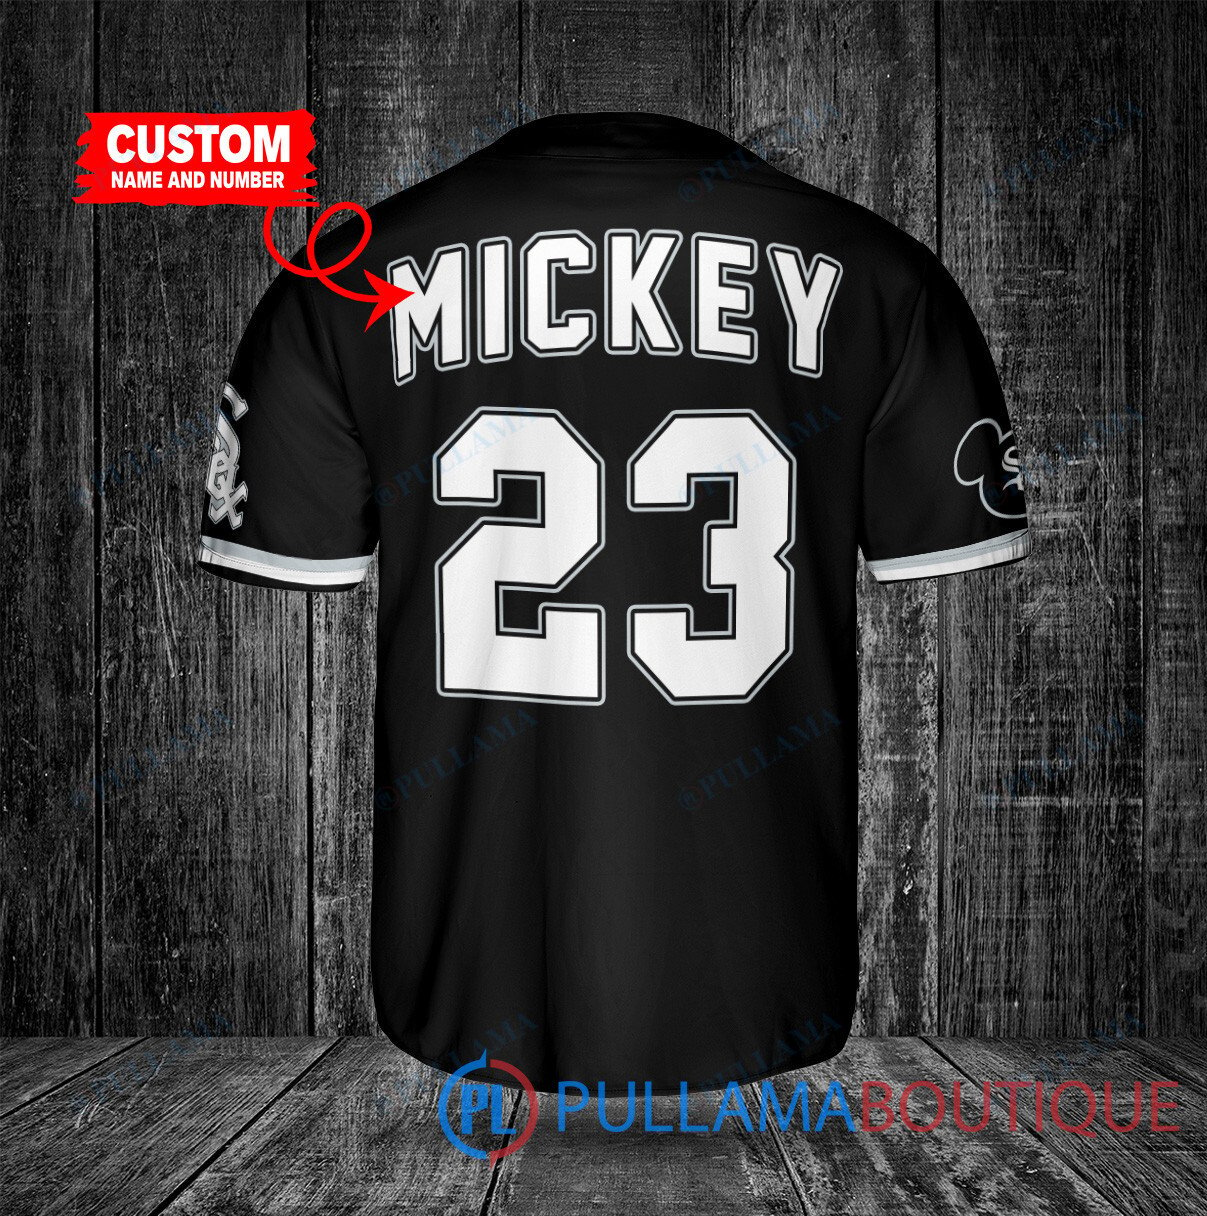 Get Your Custom Houston Astros Jersey - Gray! - Pullama